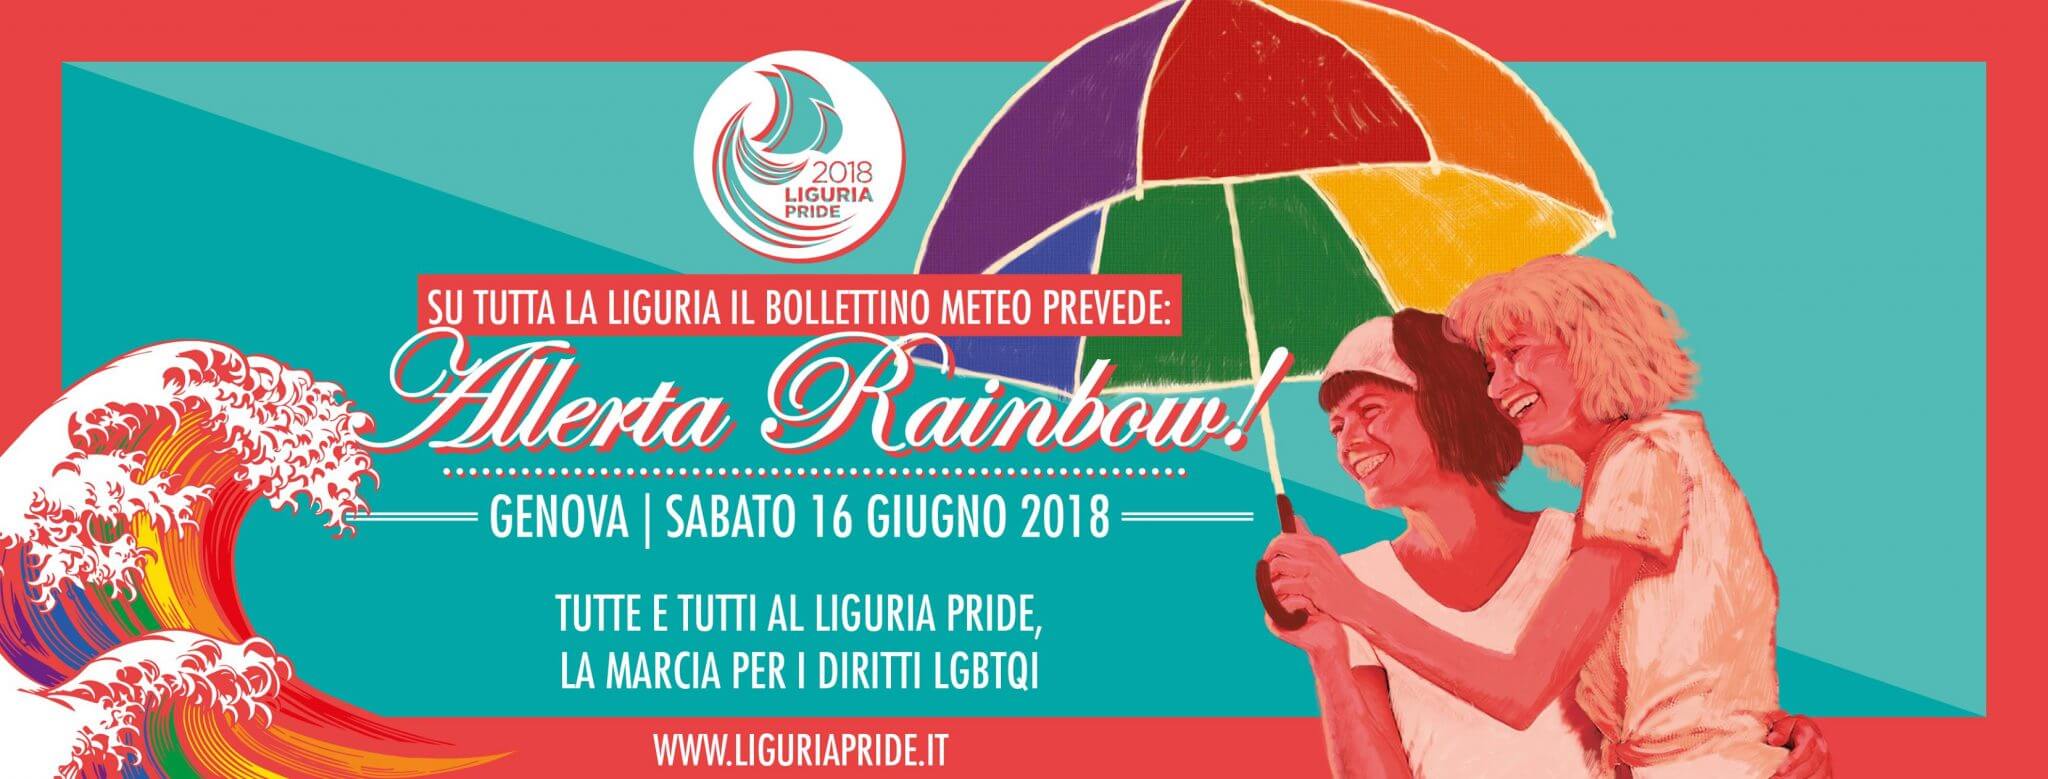 Torino guida l'Onda Pride del weekend: 7 città in piazza - 29750191 2012065495683754 4779691929095656606 o - Gay.it